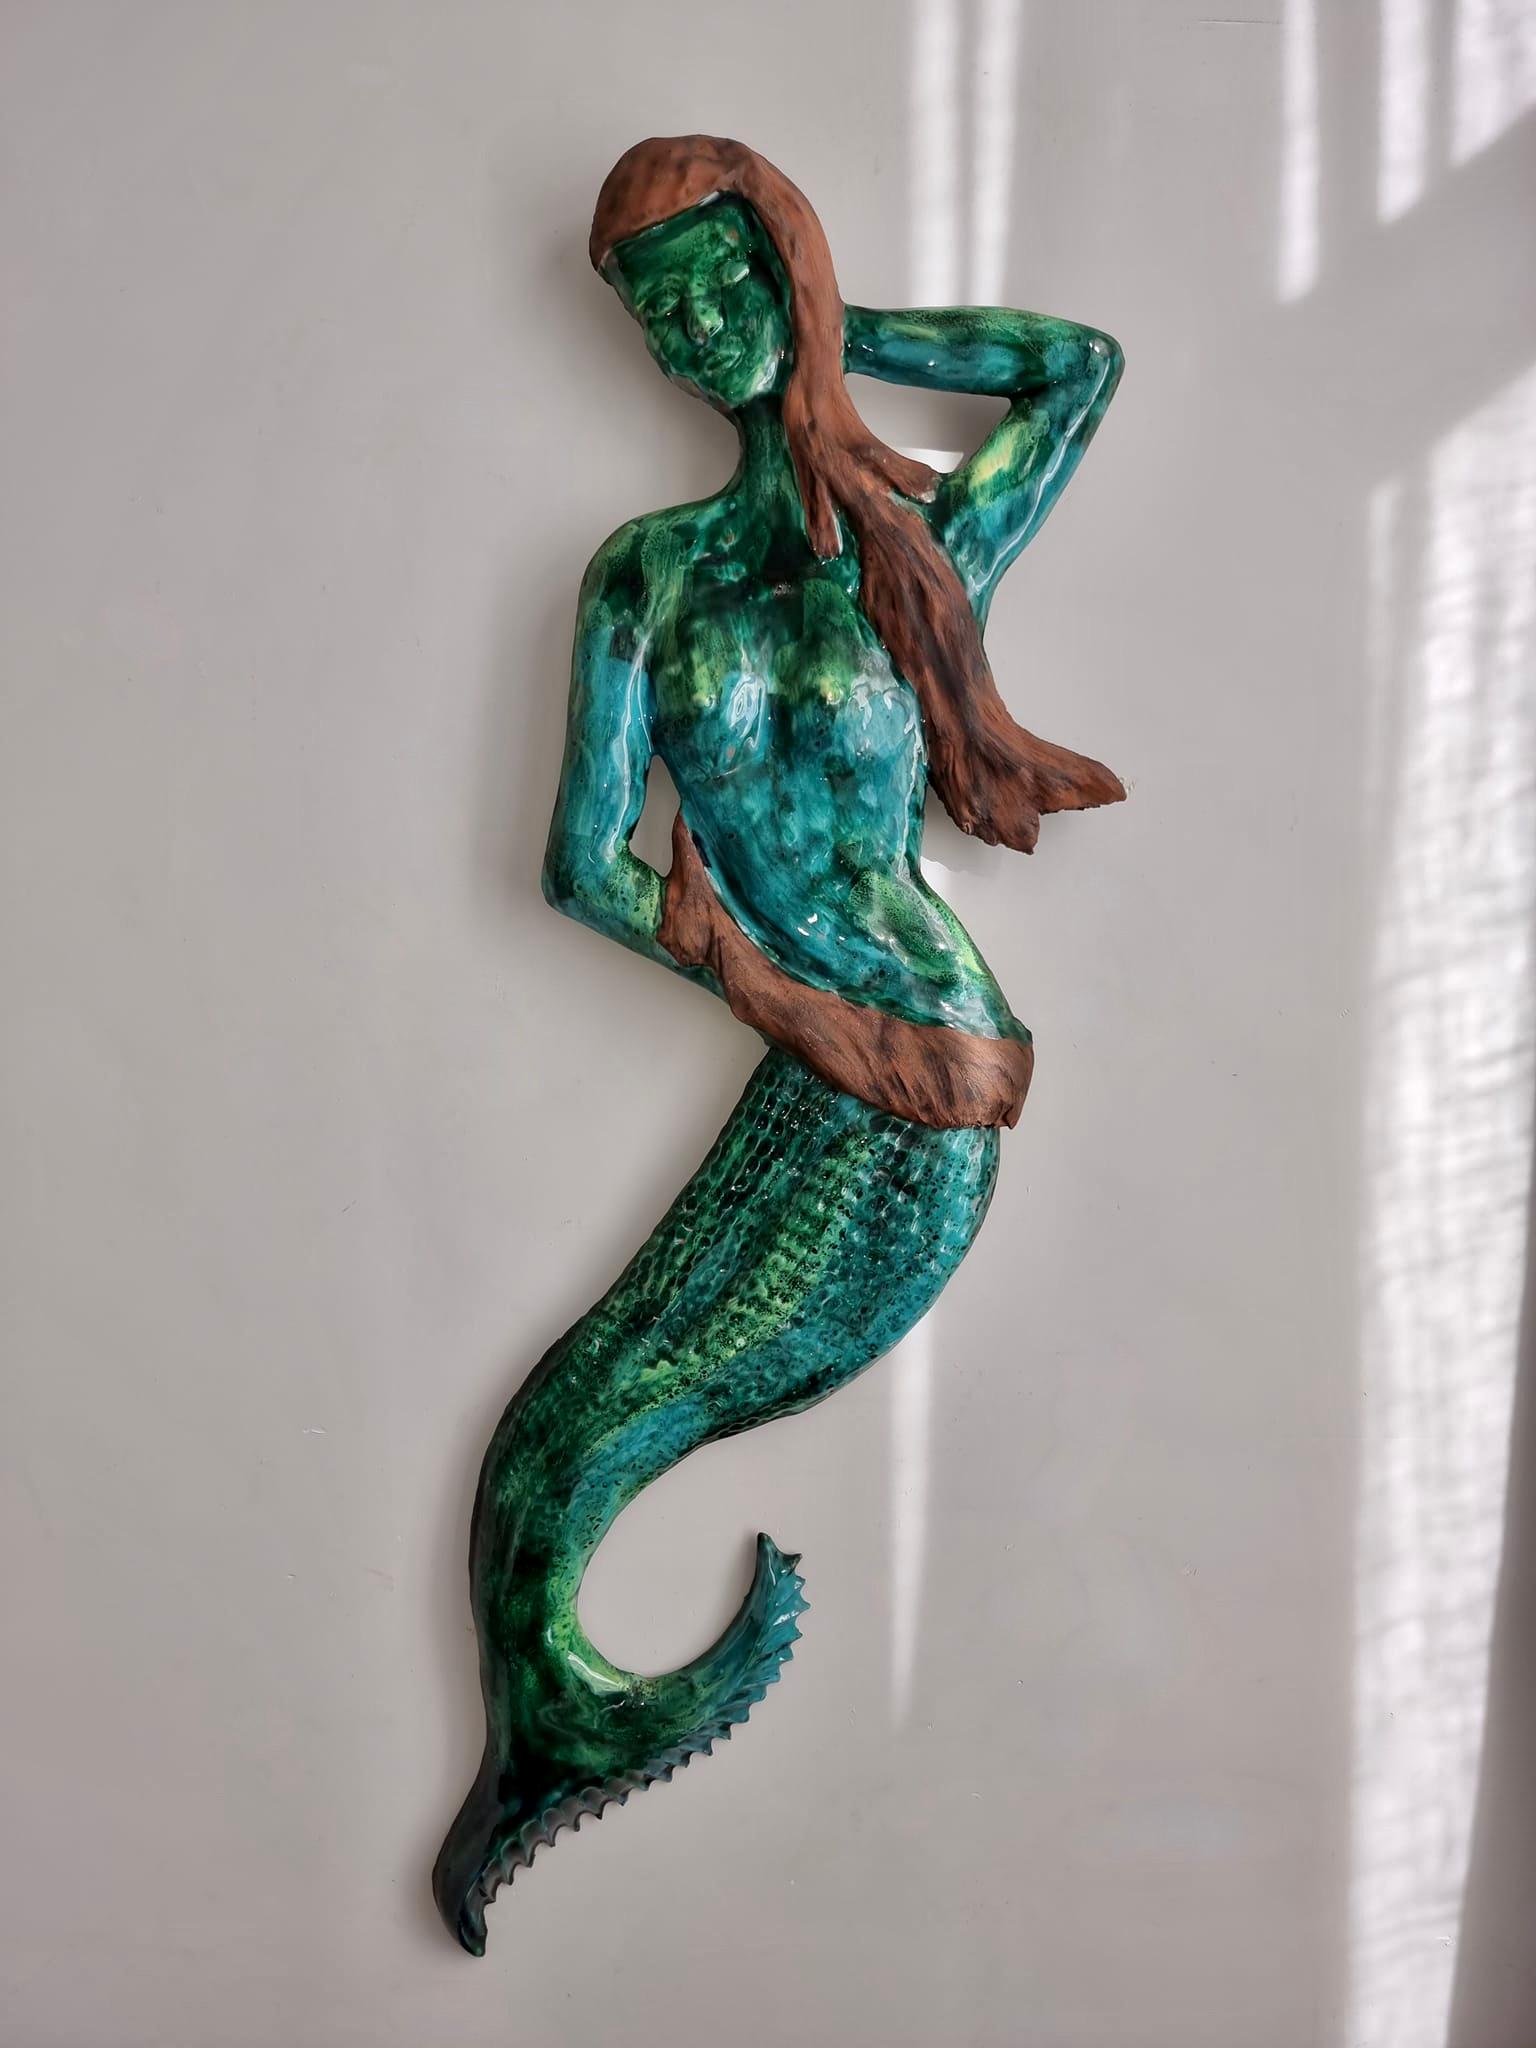 Glazed  Italian Terracotta Mermaid Wall Plaque  For Sale